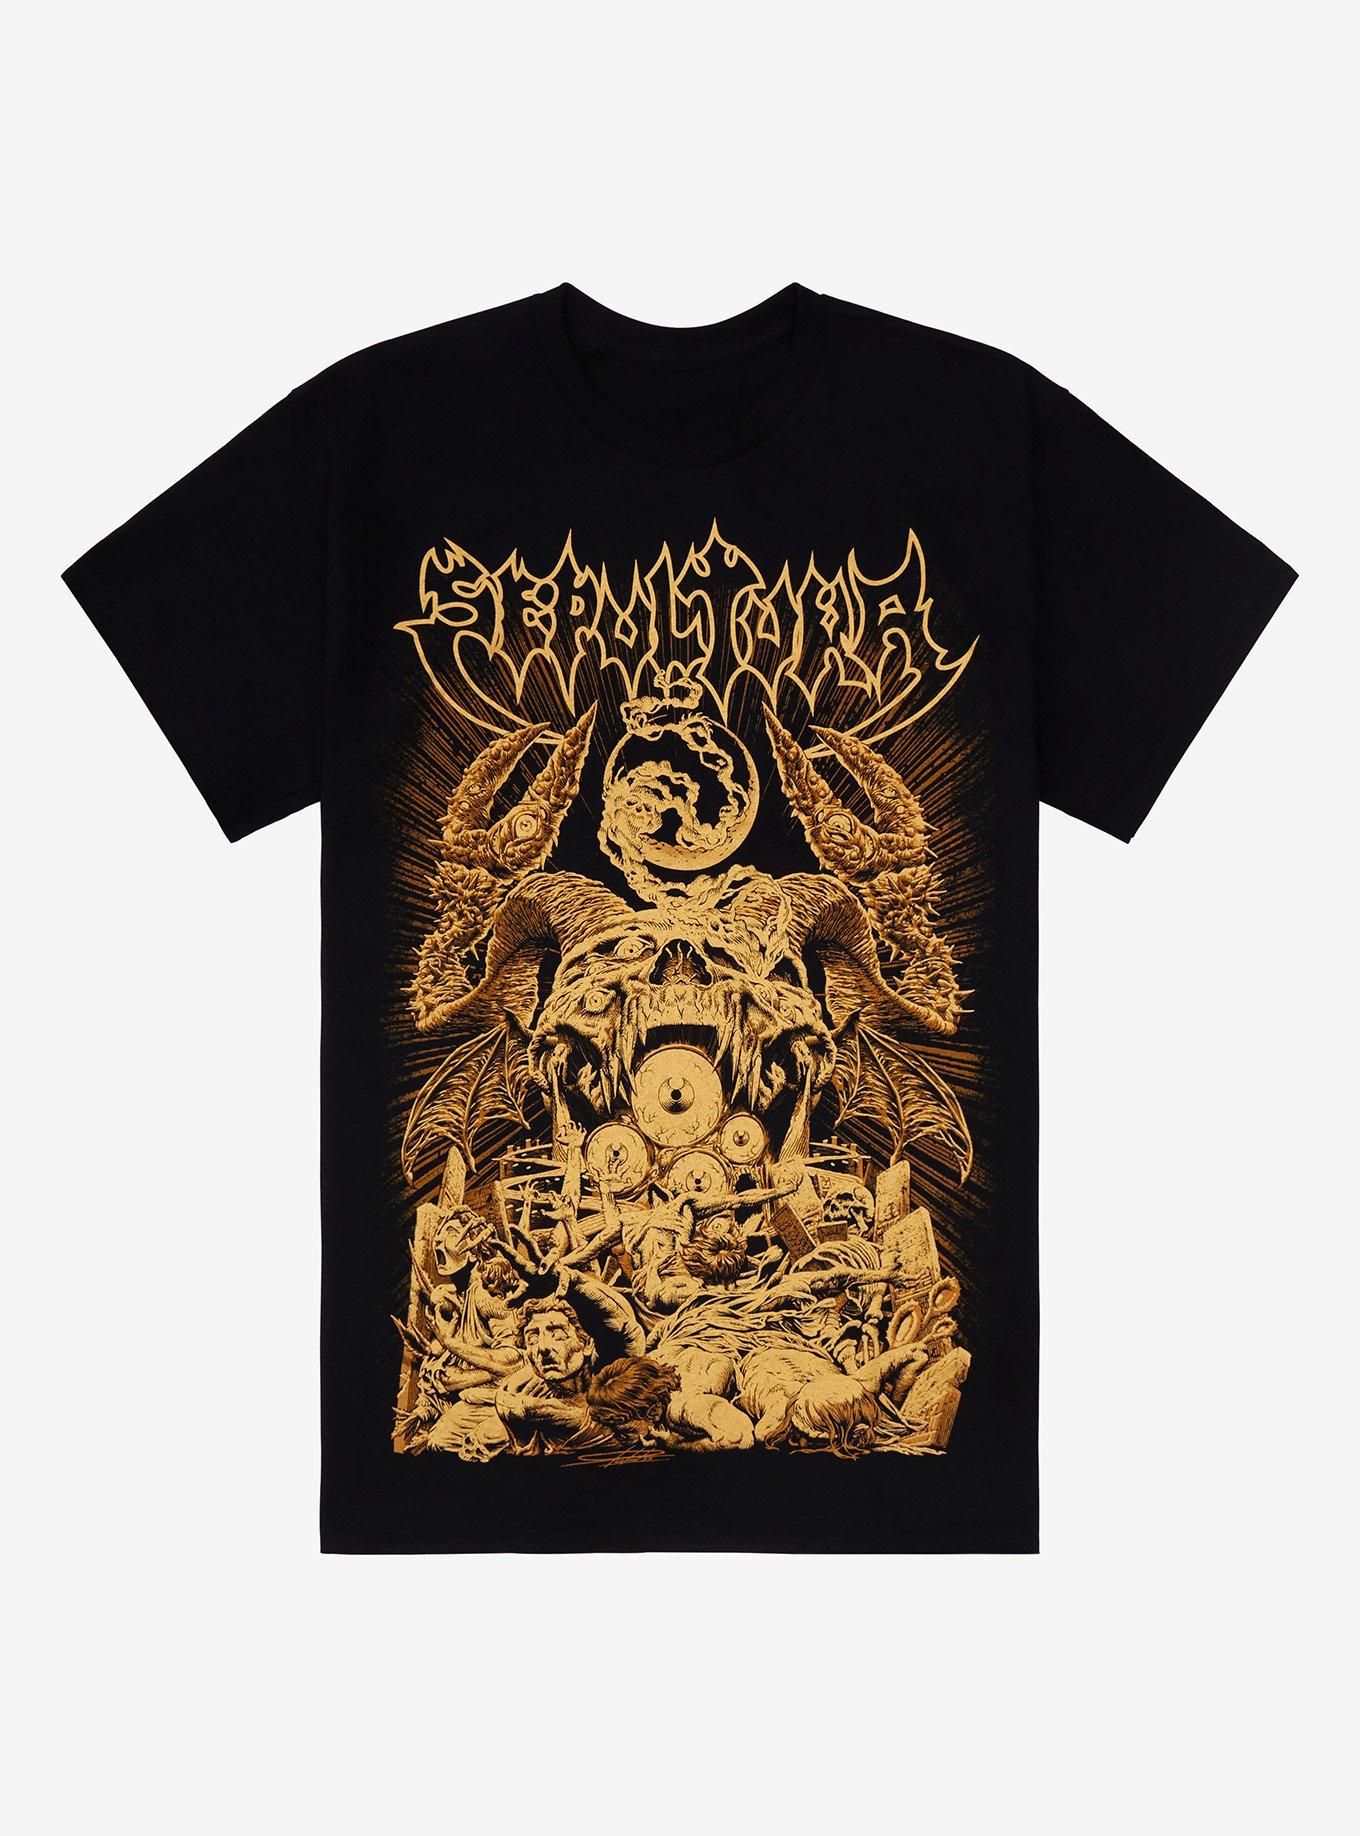 Sepultura Arise T-Shirt | Hot Topic